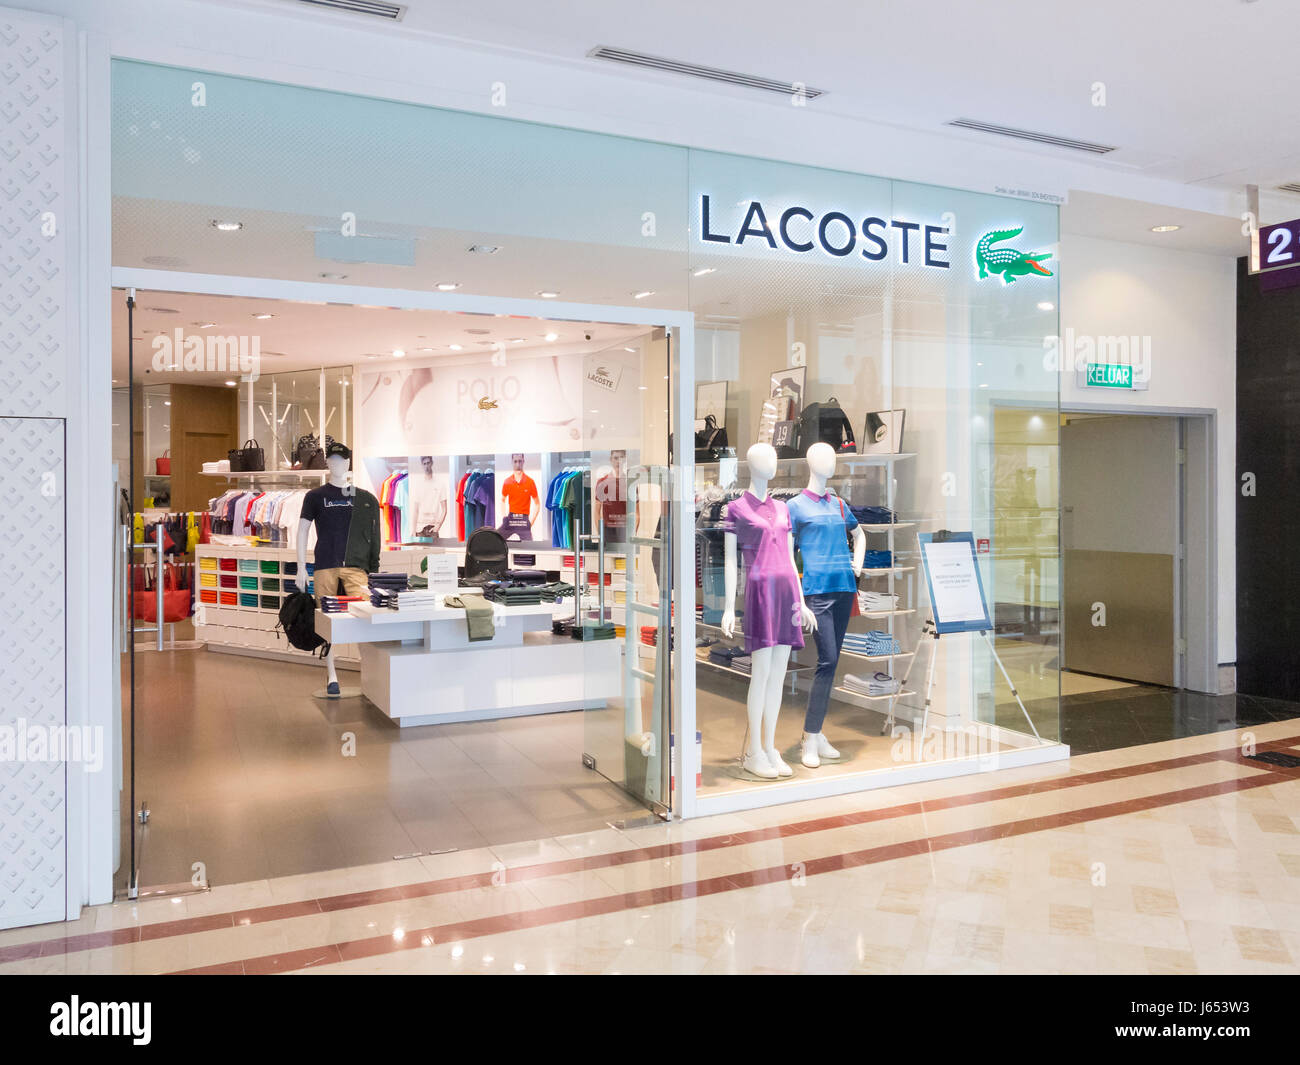 Boutique Lacoste, Malaisie Photo Stock 